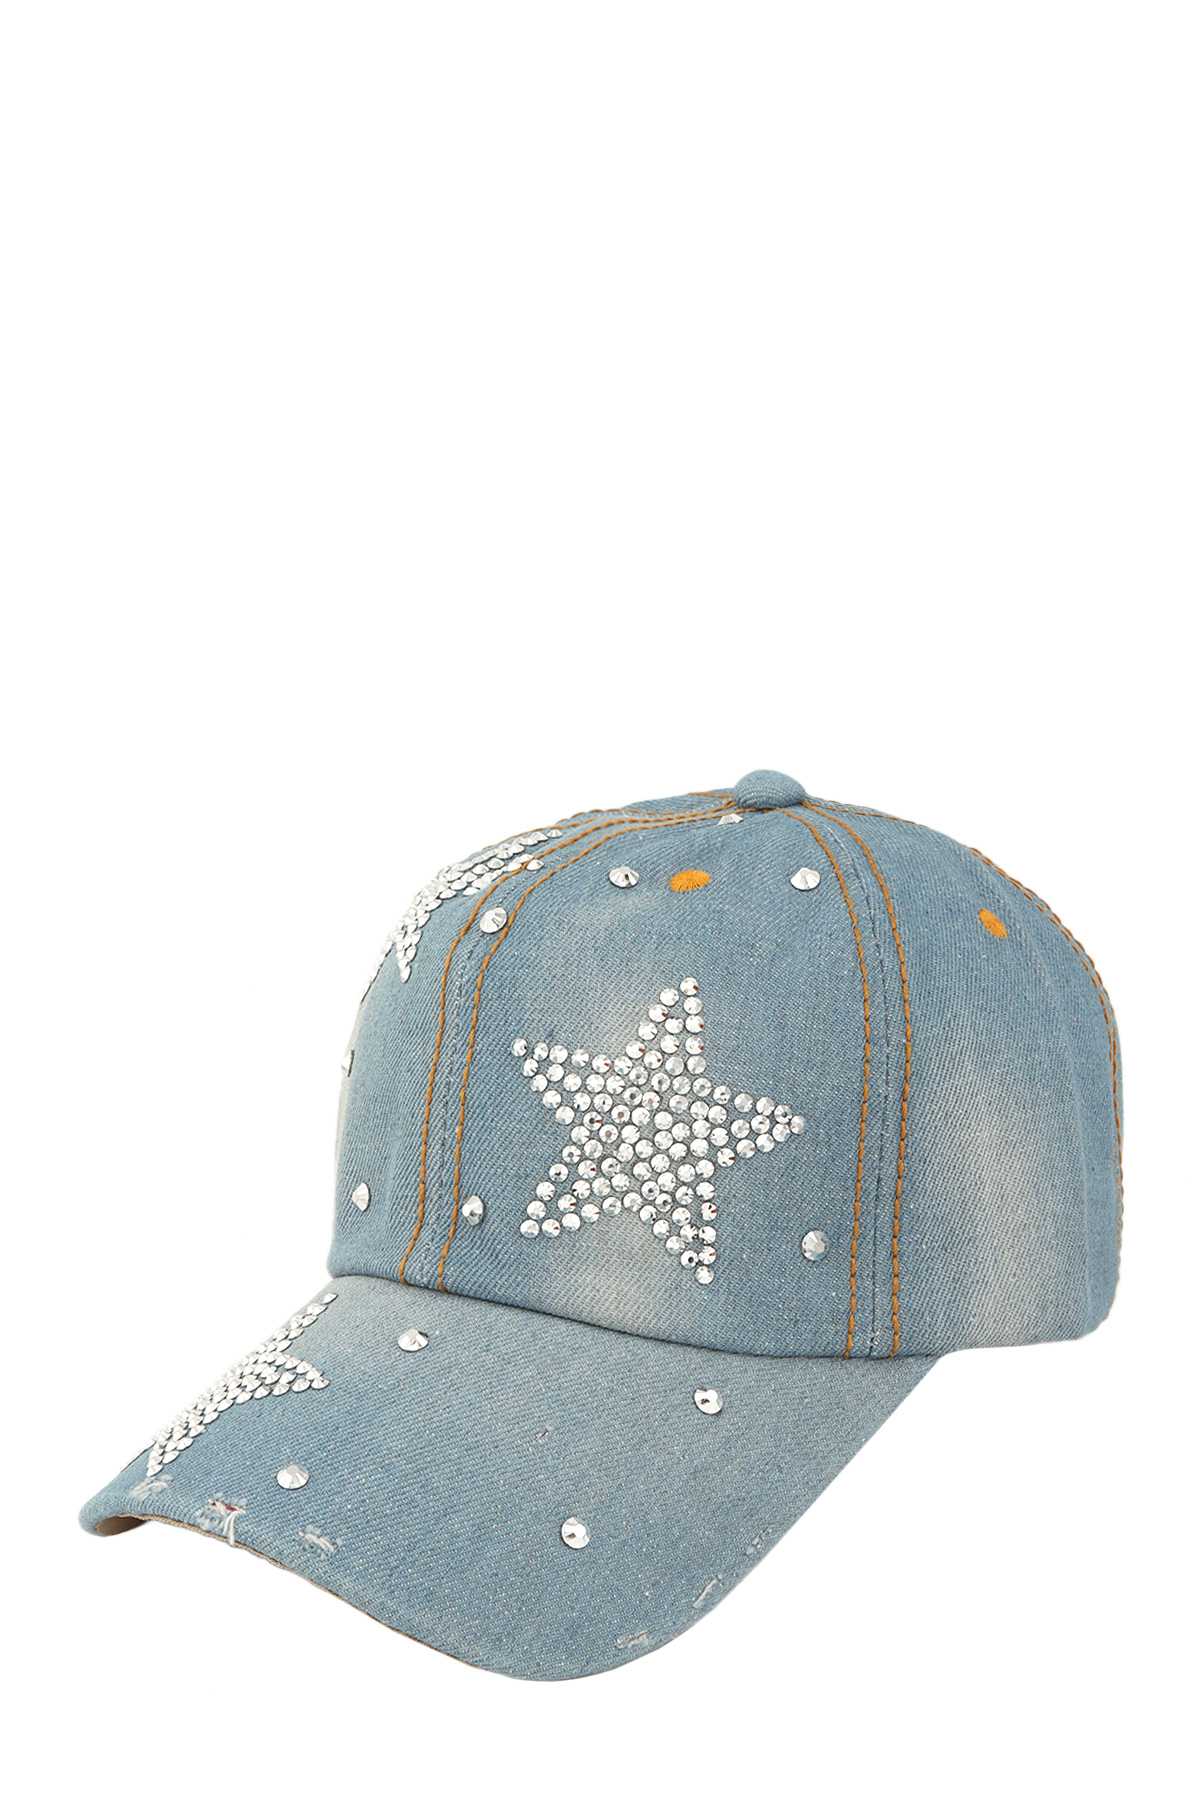 Rhinestone Star and Denim Baseball Cap